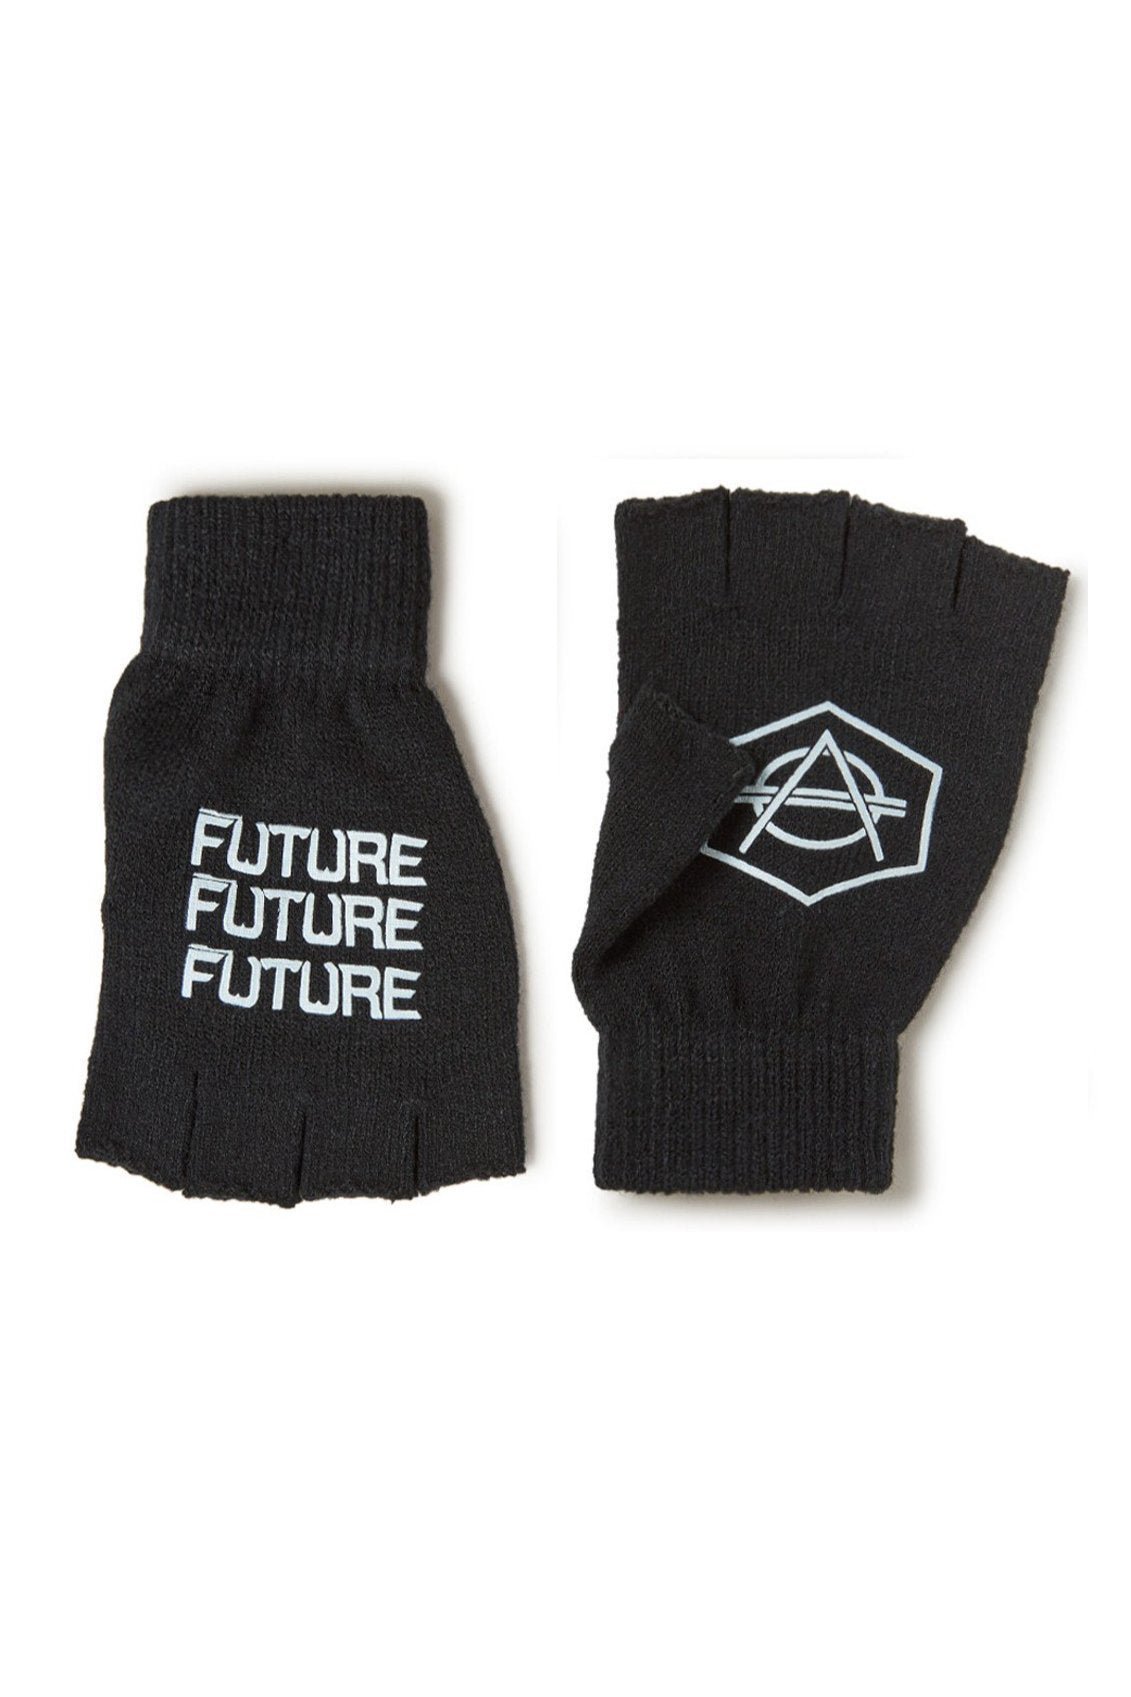 Future knitted gloves - HEXAGON - Don Diablo - Hexagon